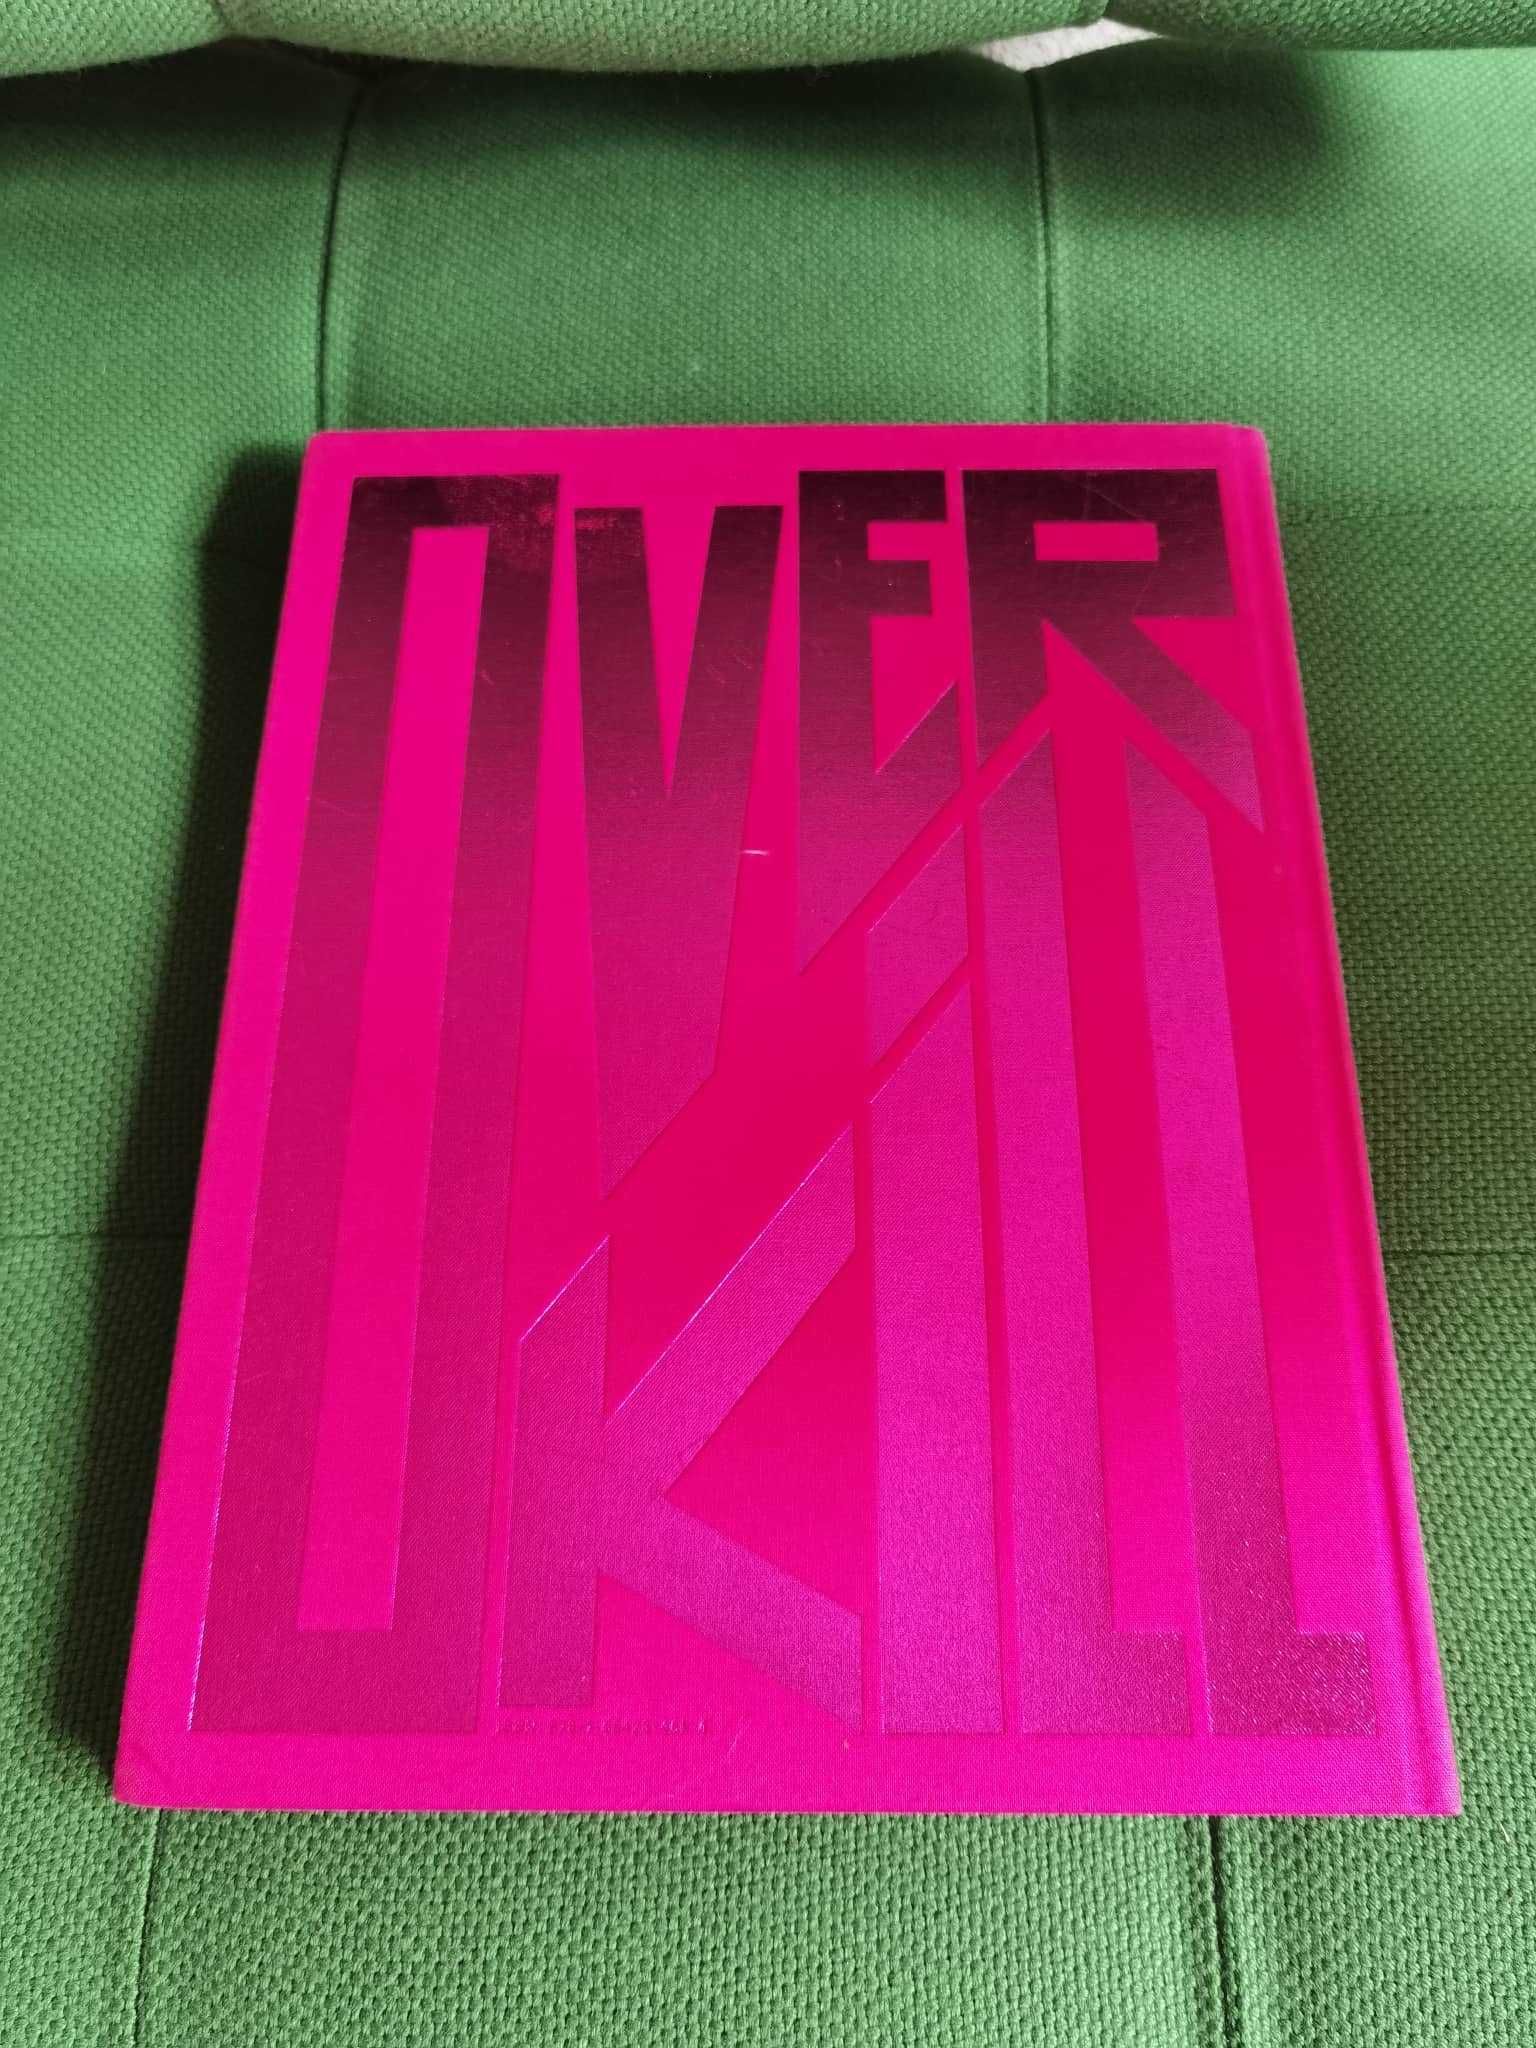 Livro overkill - the art of Tomer Hanuka